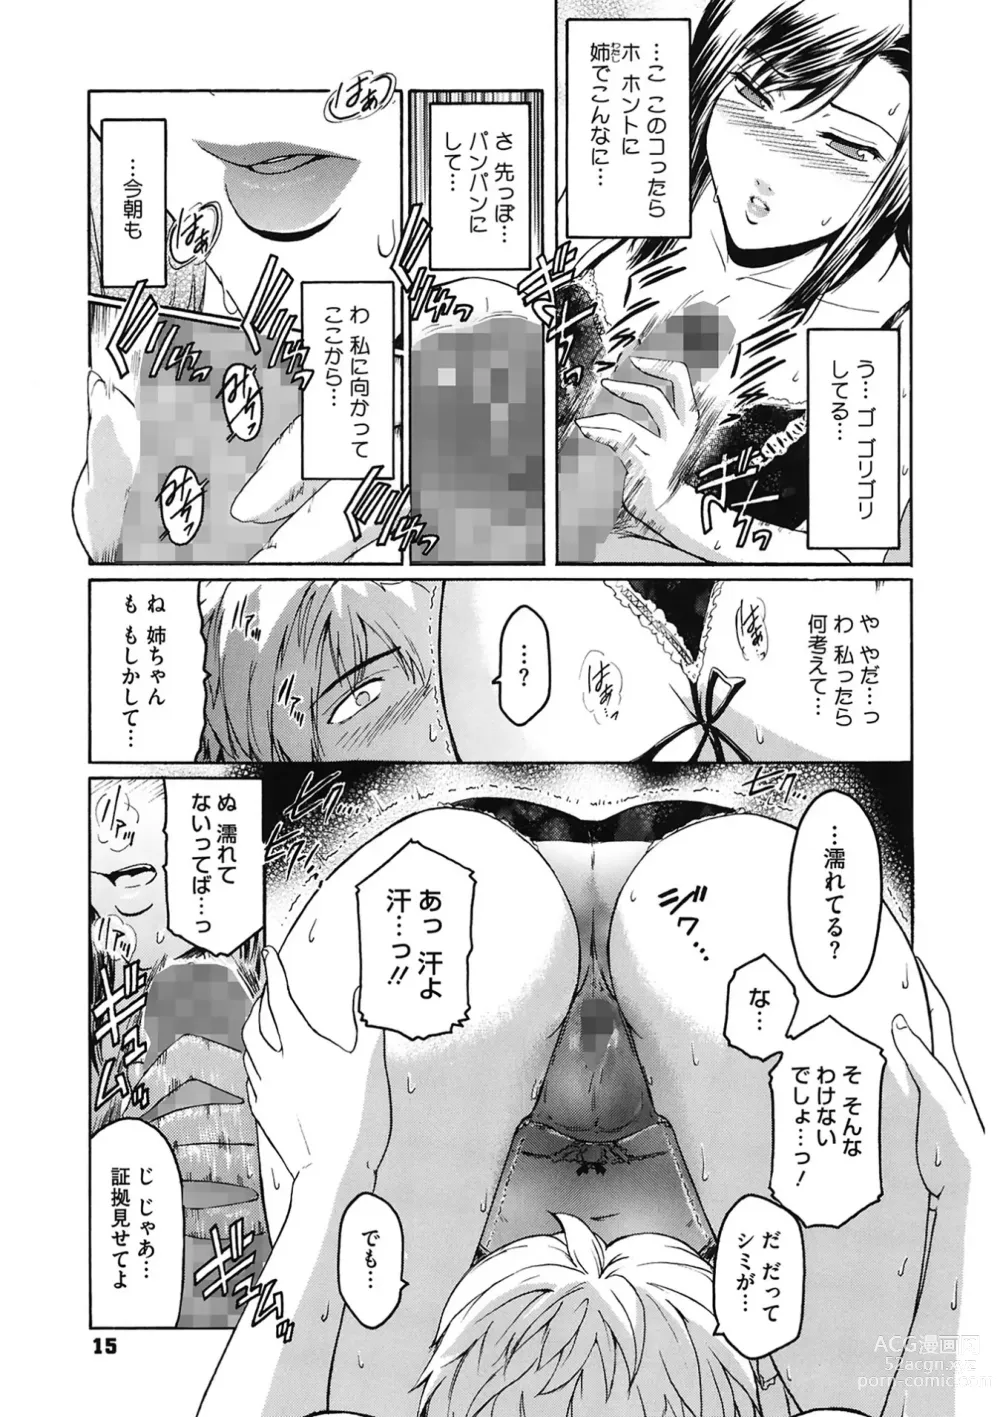 Page 15 of manga Second Virgin